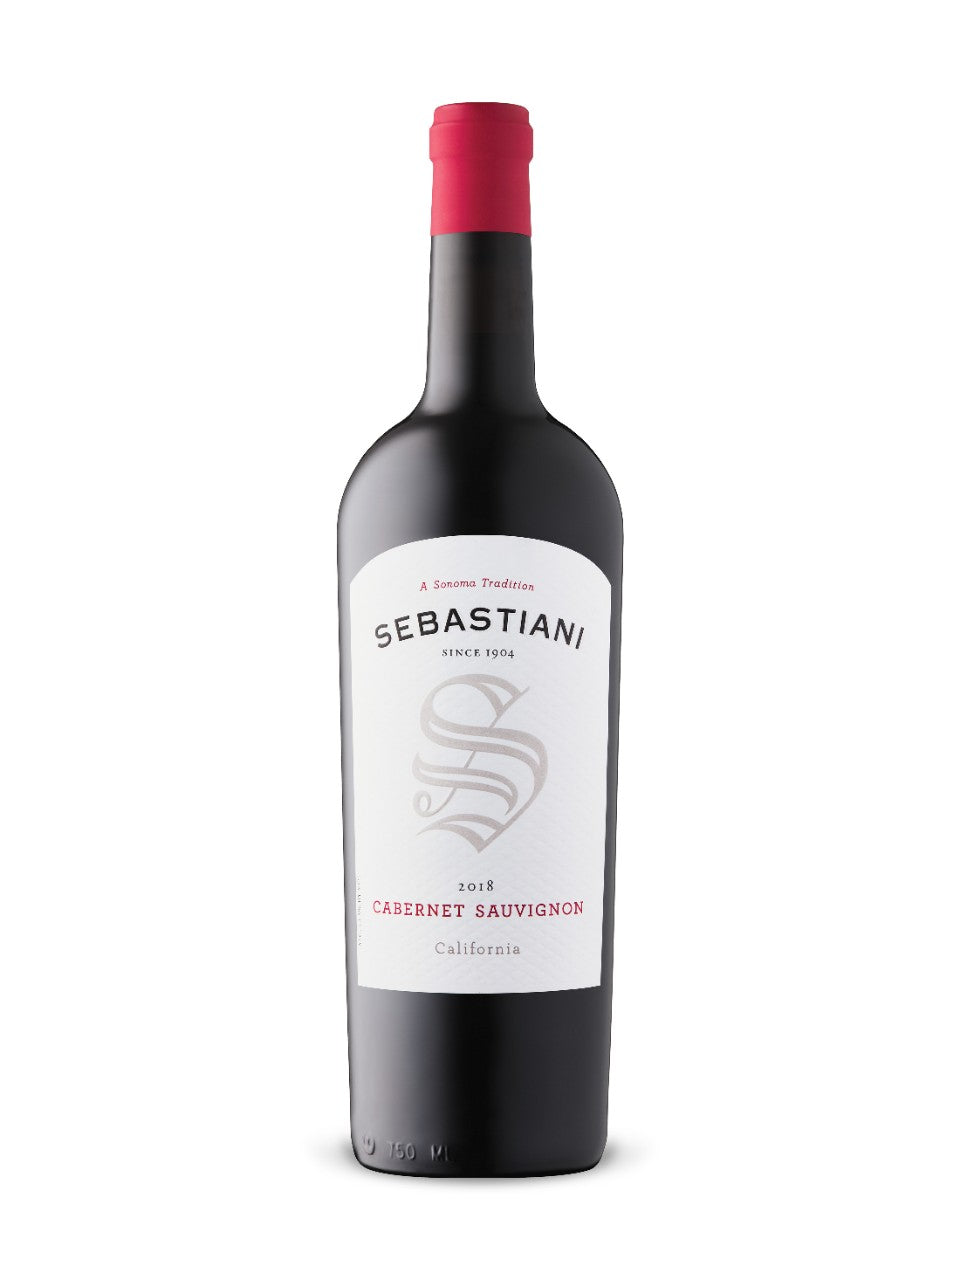 Sebastiani Cabernet Sauvignon 750 mL bottle